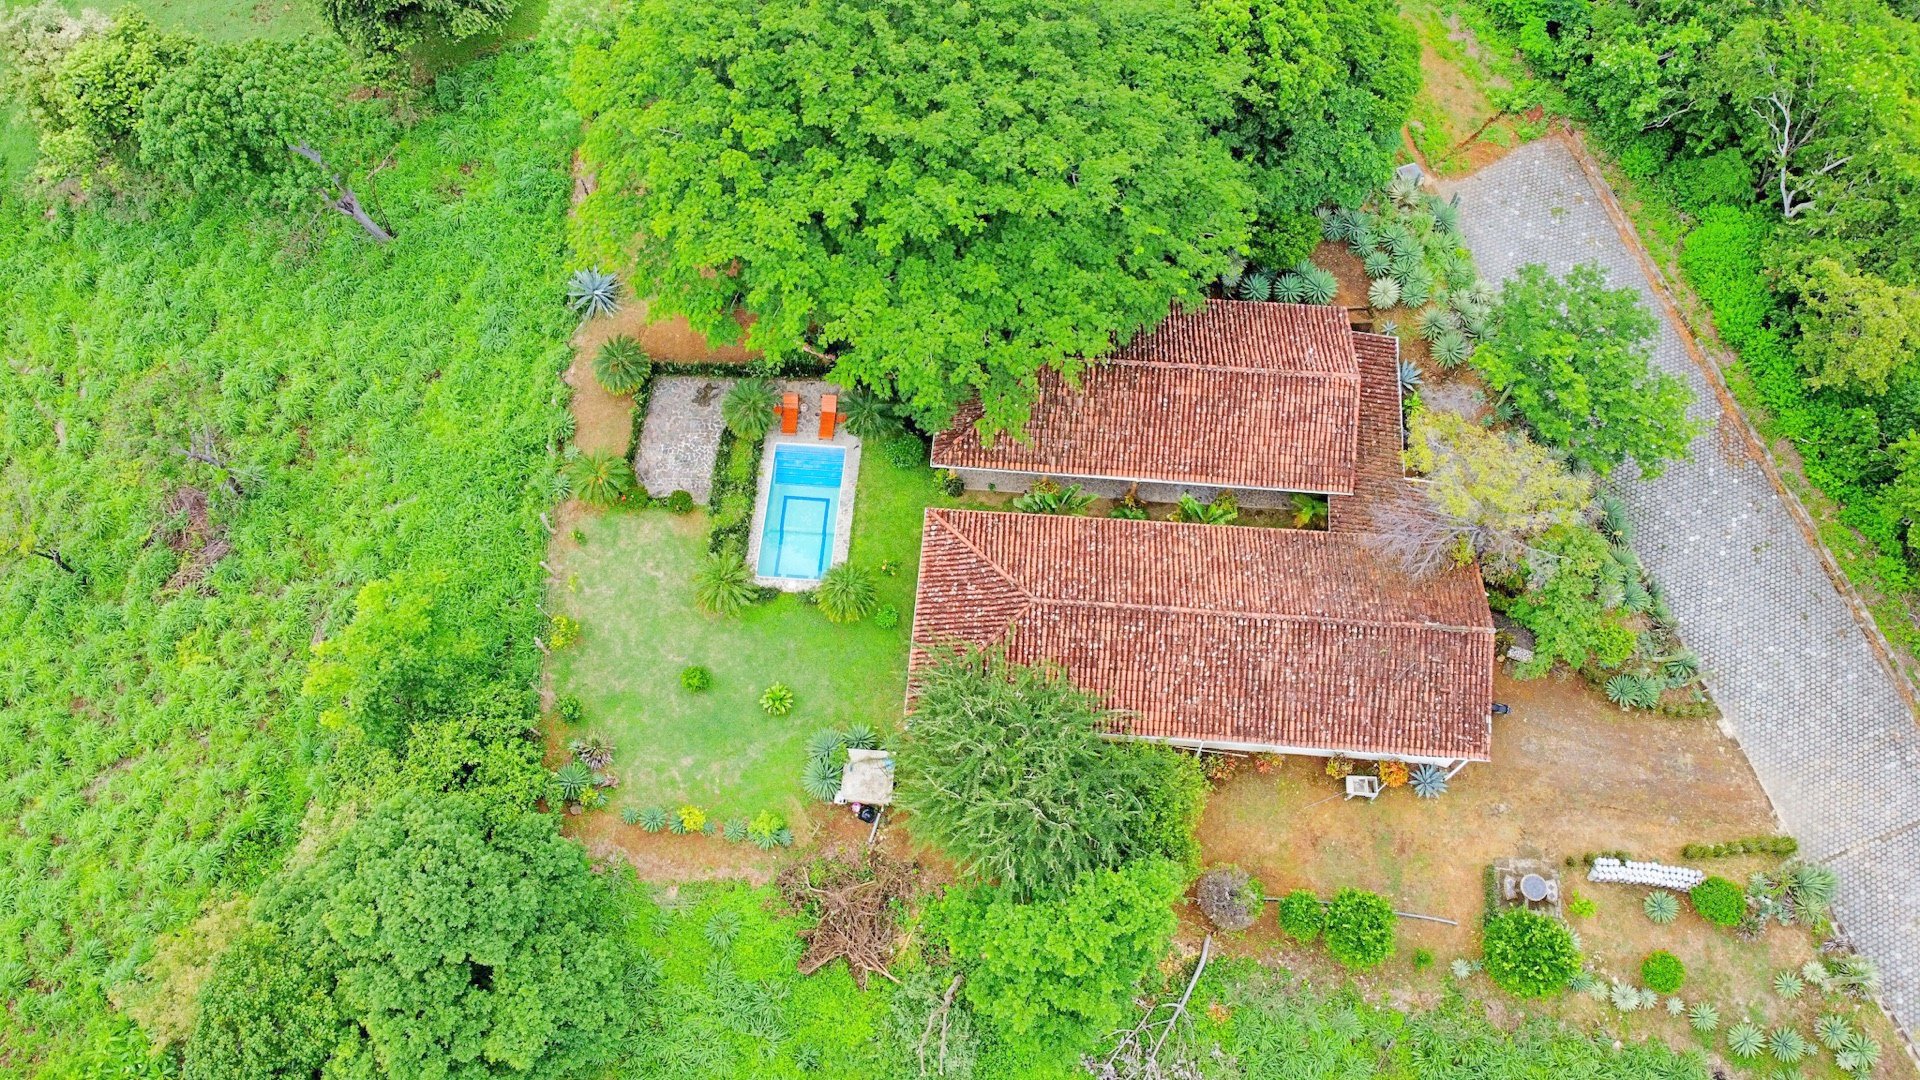 Home House Property for Sale San Juan Del Sur Nicaragua 12.jpg